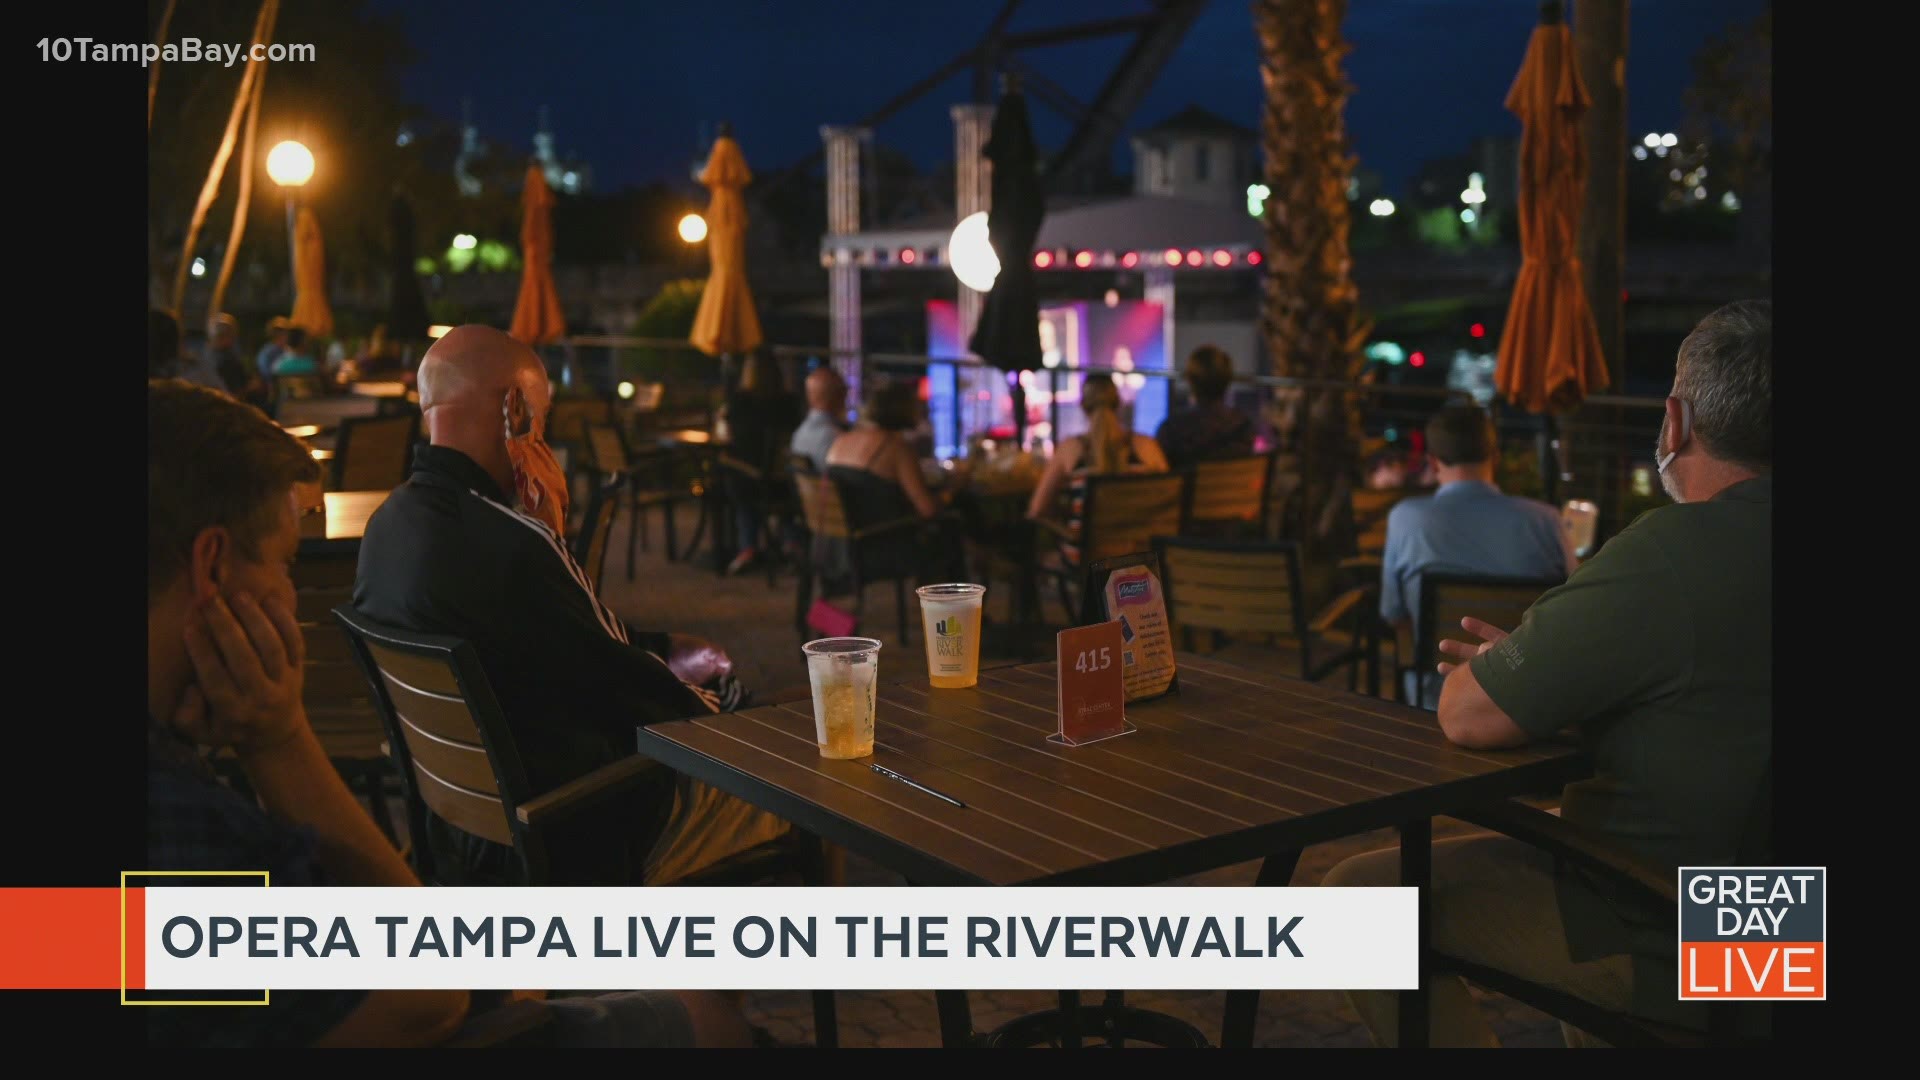 Opera Tampa LIVE on the Riverwalk